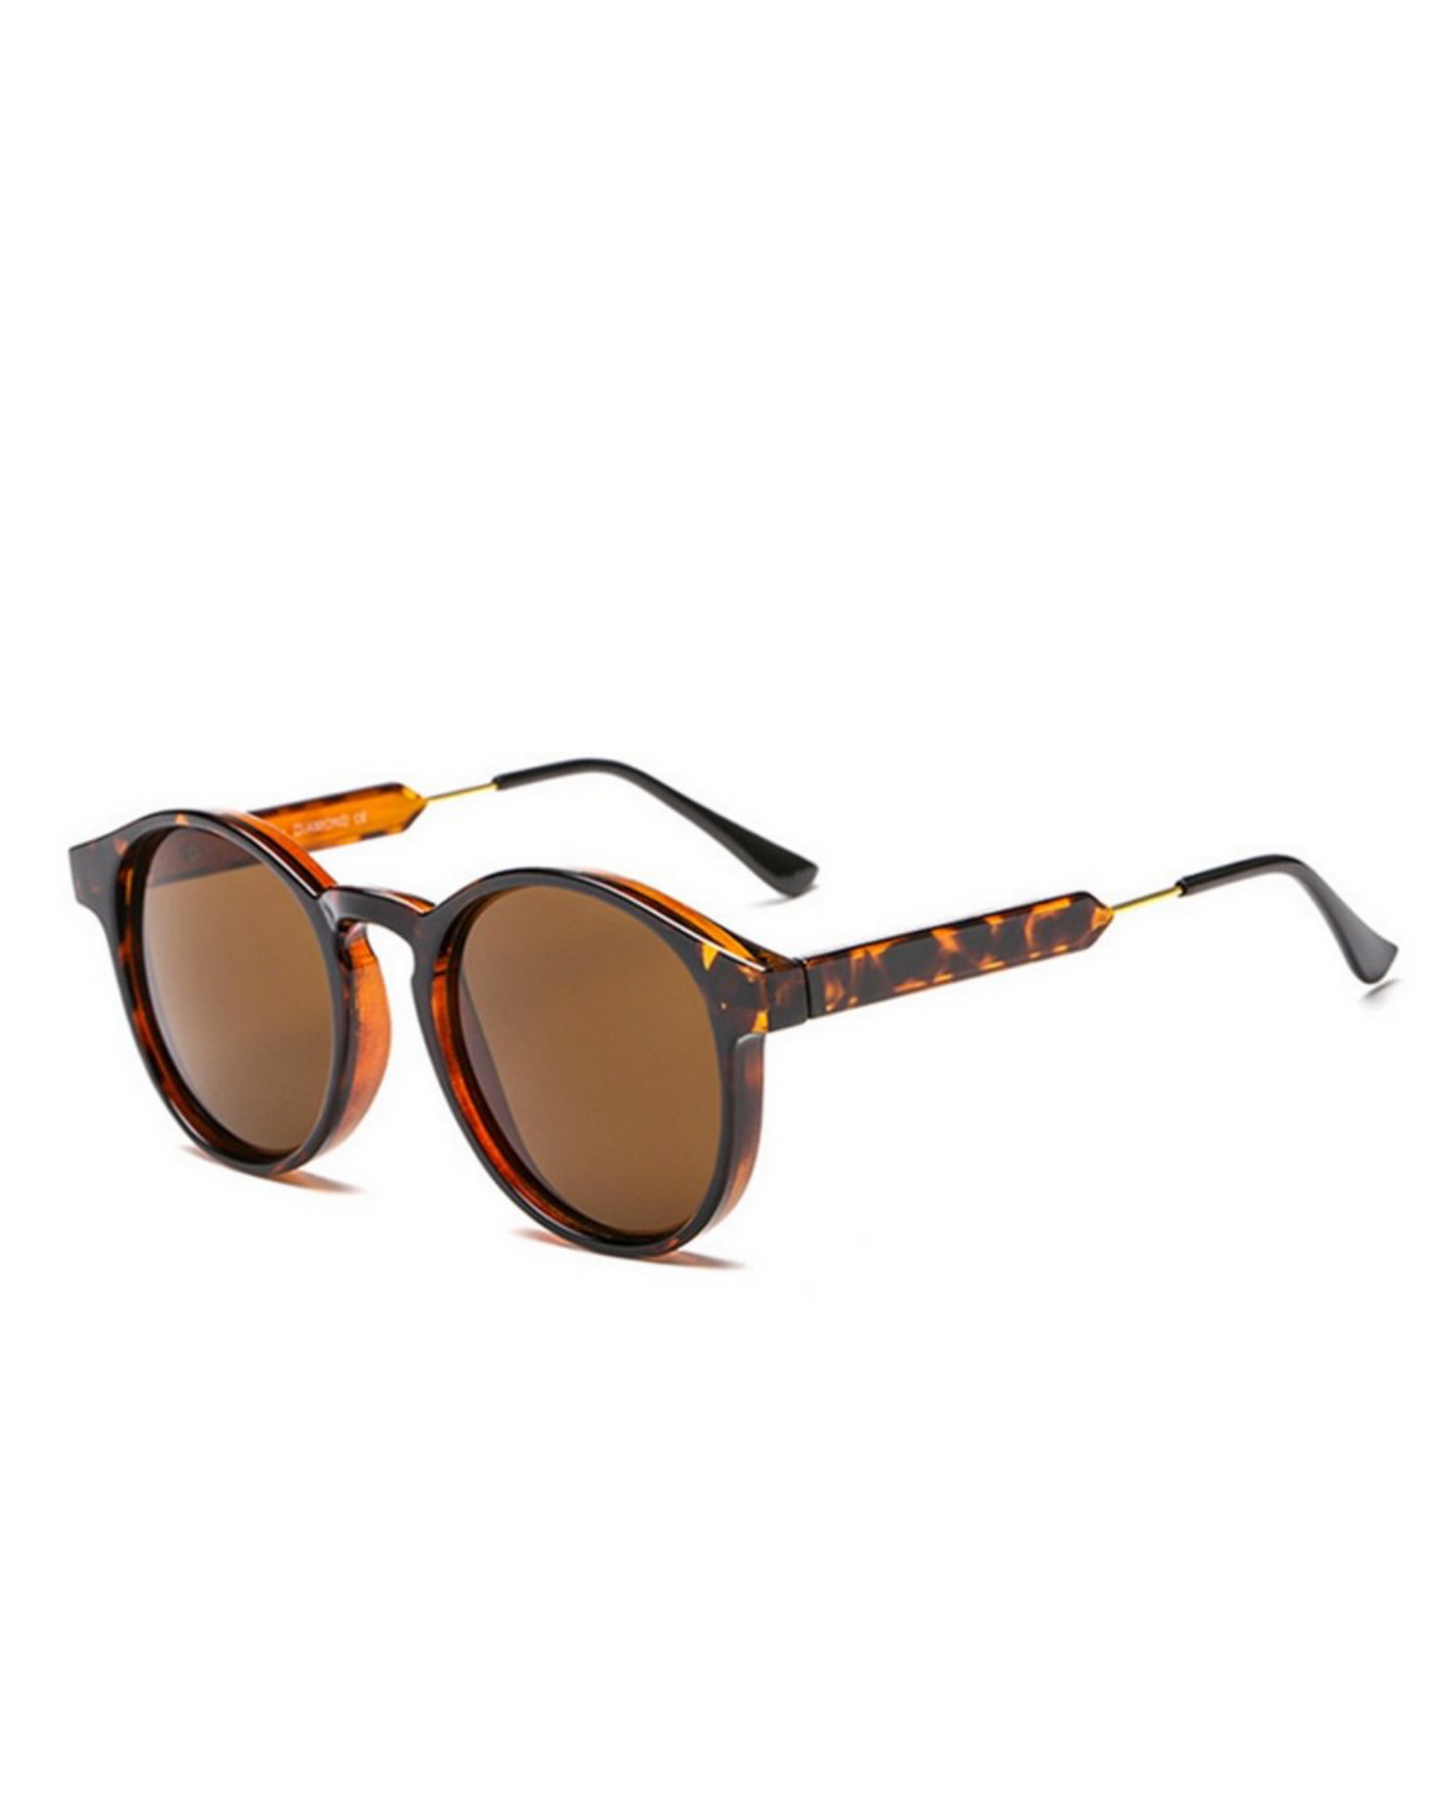 Ashton Sunglasses In Tortoise - The Details Boutique